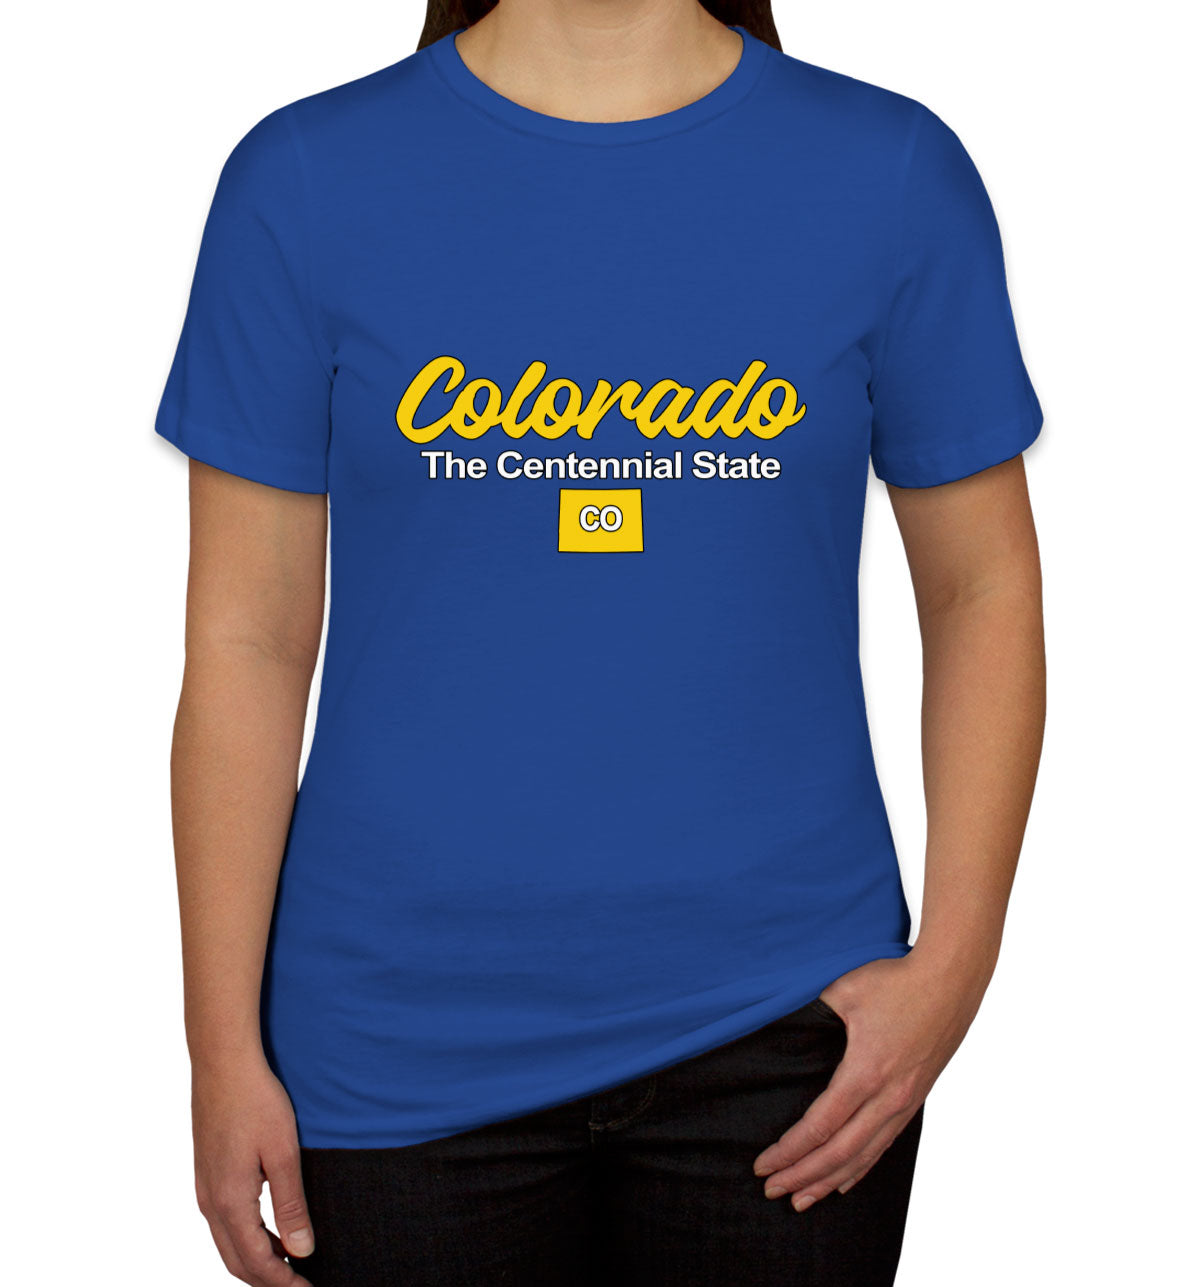 Colorado The Centennial State Women's T-shirt